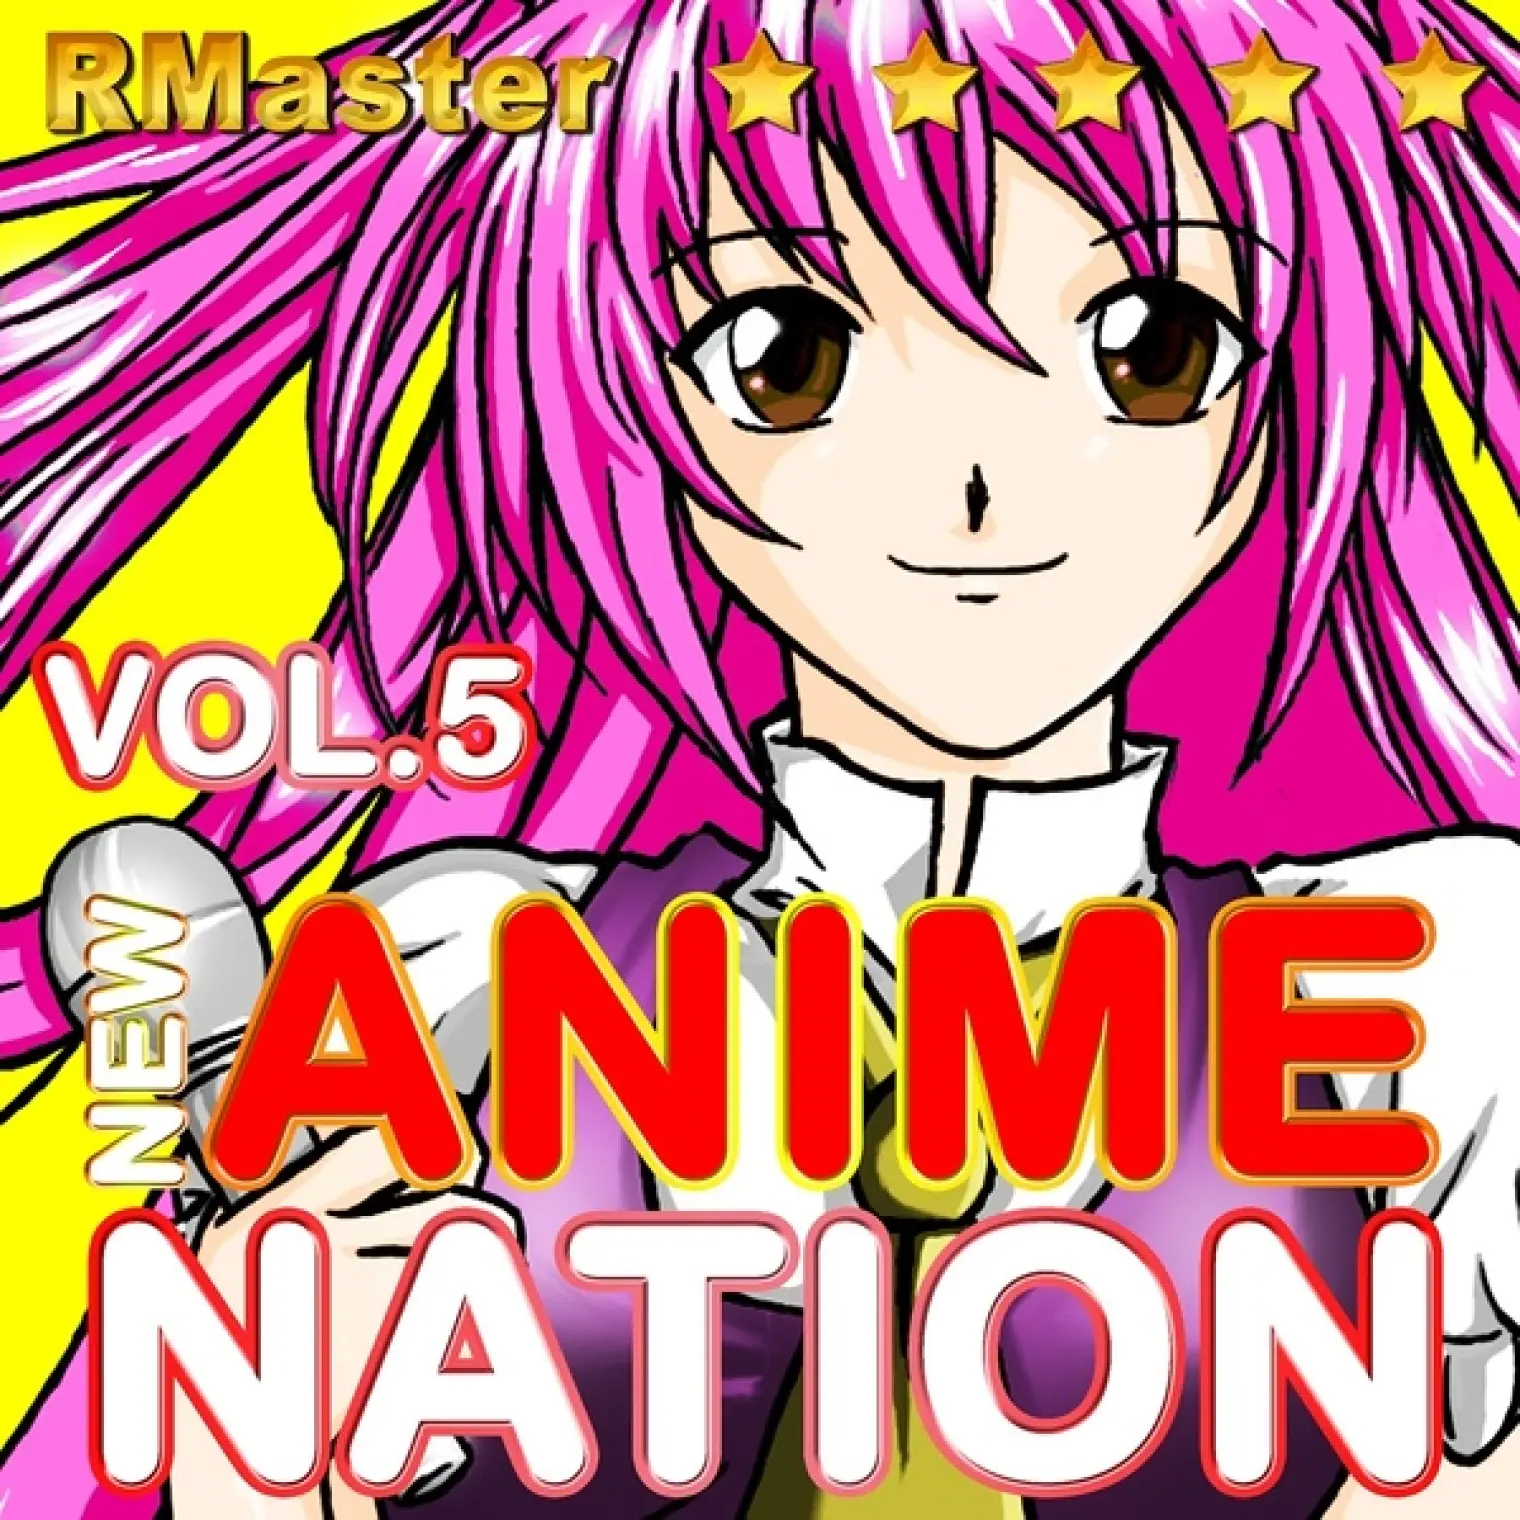 New Anime Nation, Vol. 5 -  RMaster 